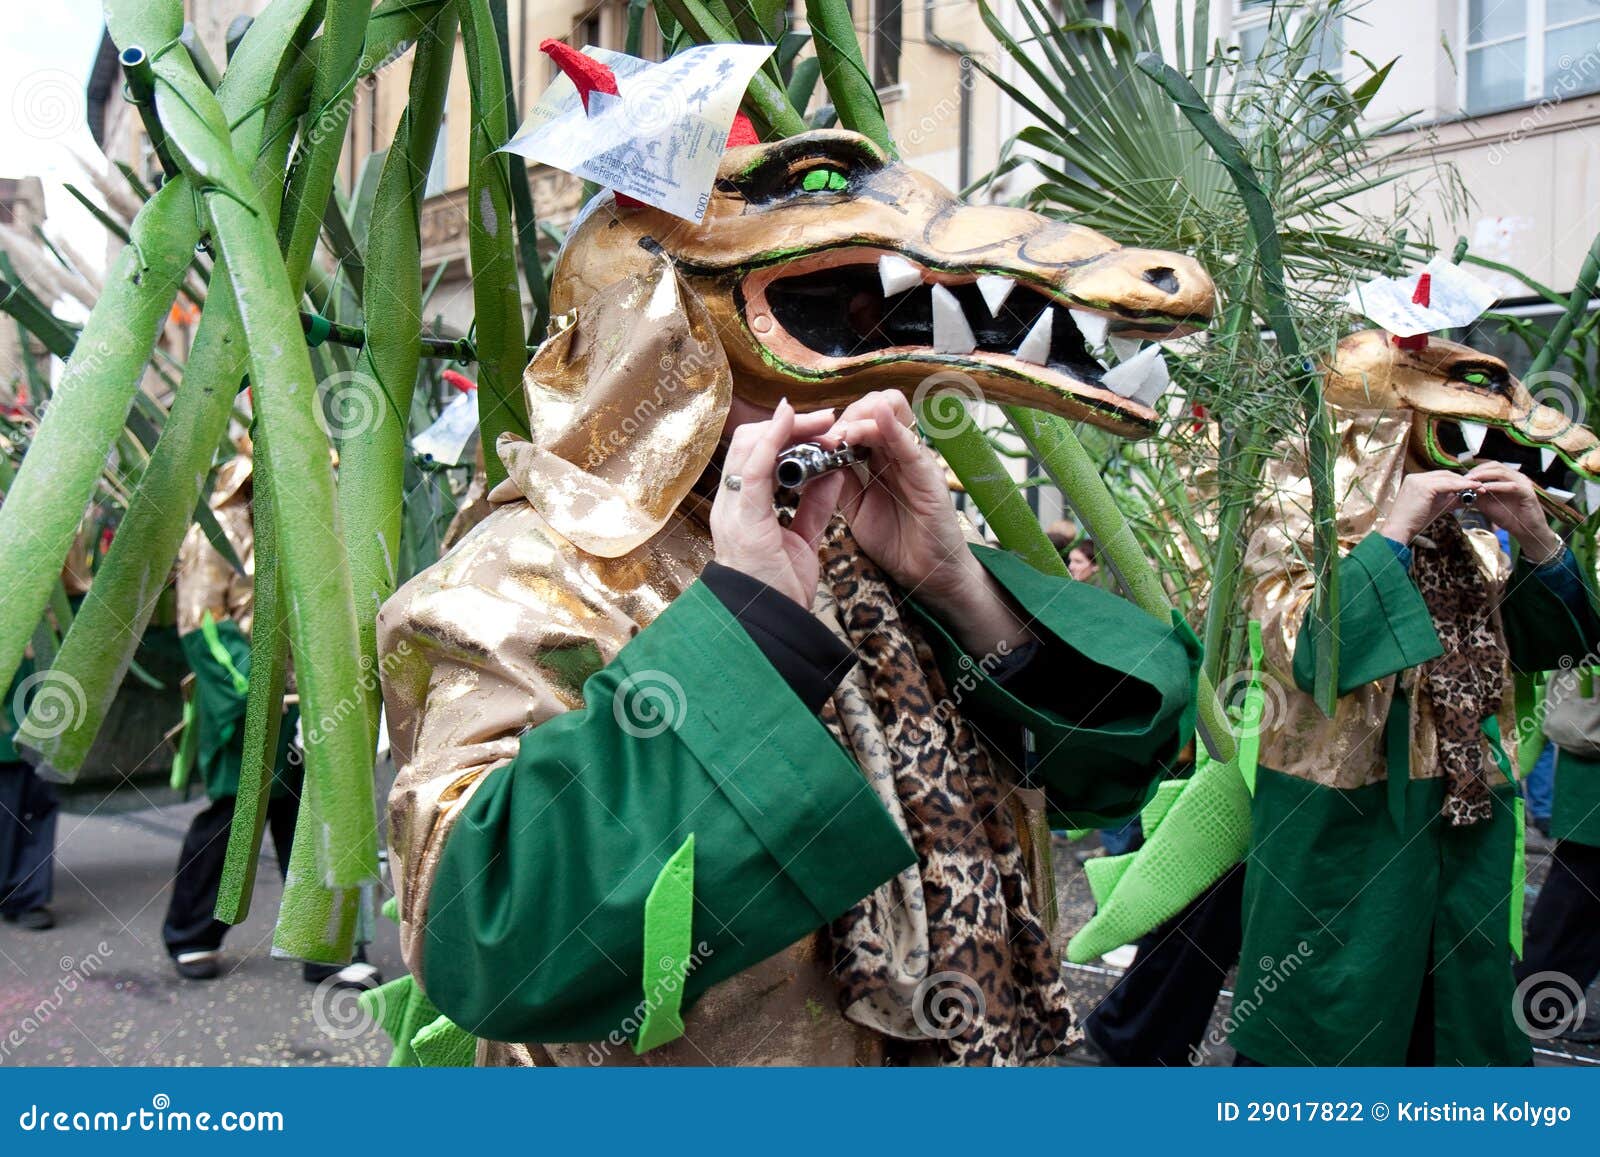 parade, carnival in basel, switzerland